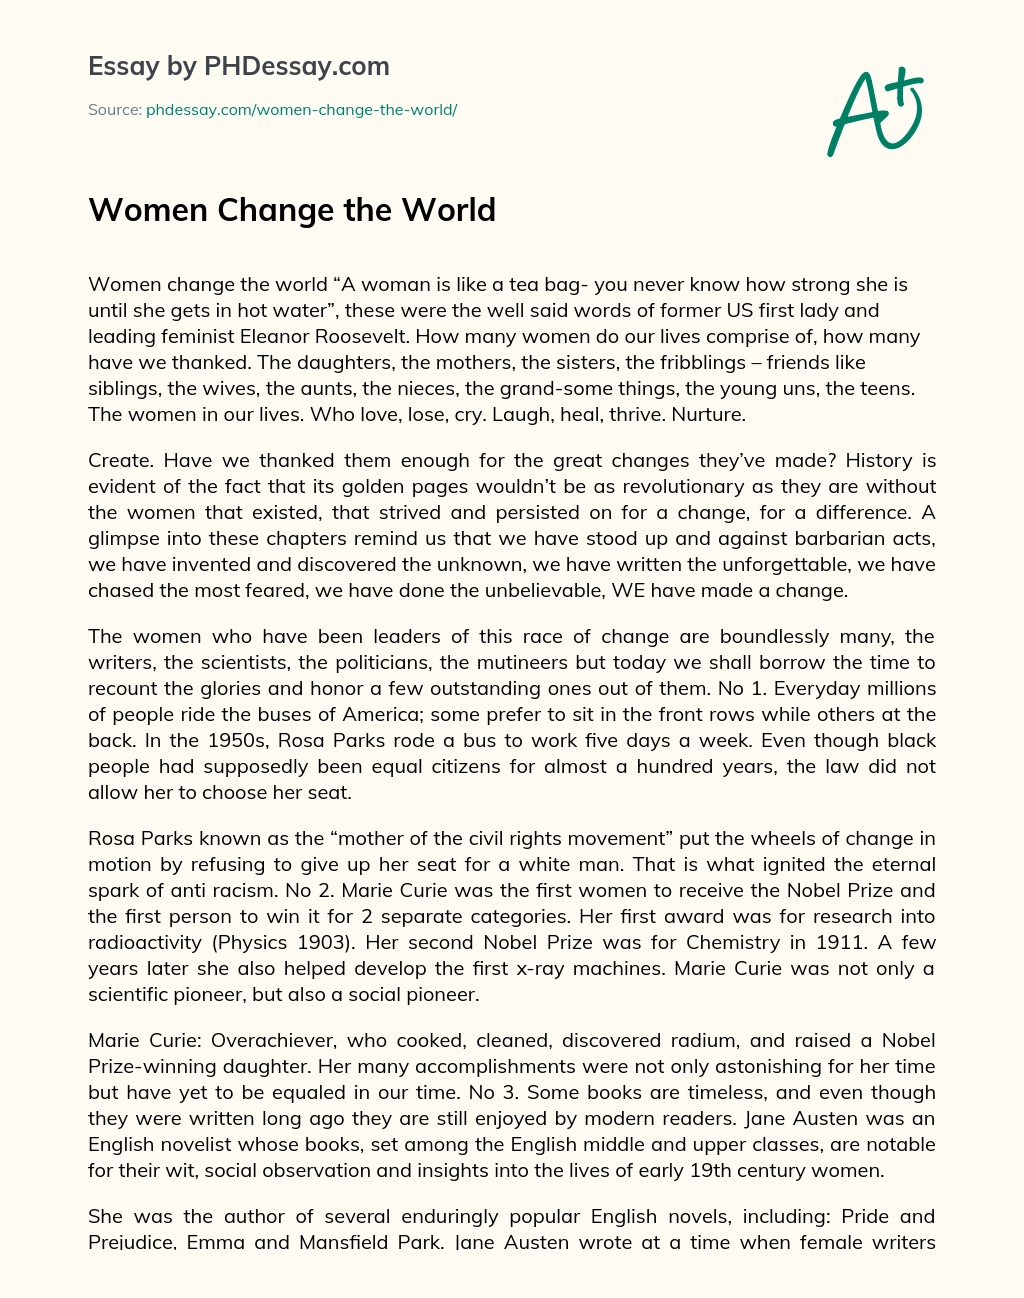 Women Change the World essay